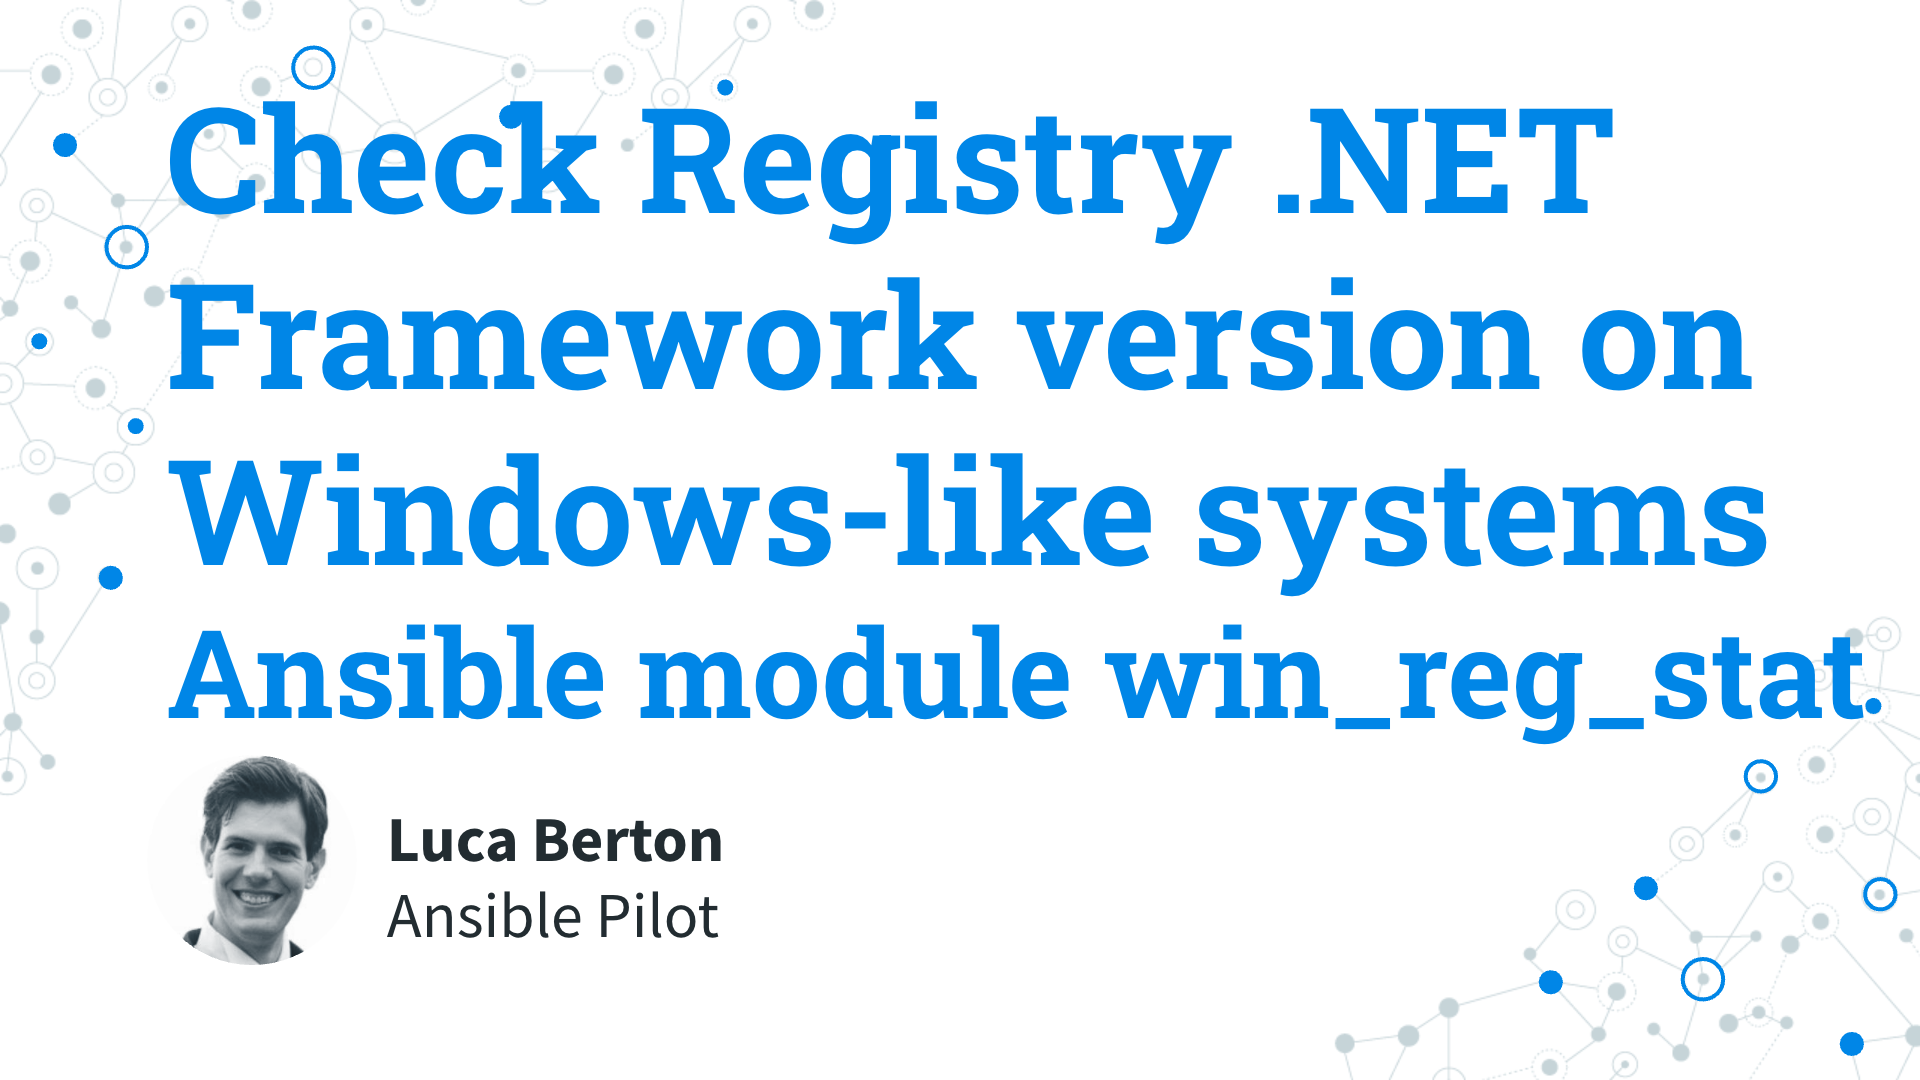 Check Registry .NET Framework version on Windows-like systems - Ansible module win_reg_stat